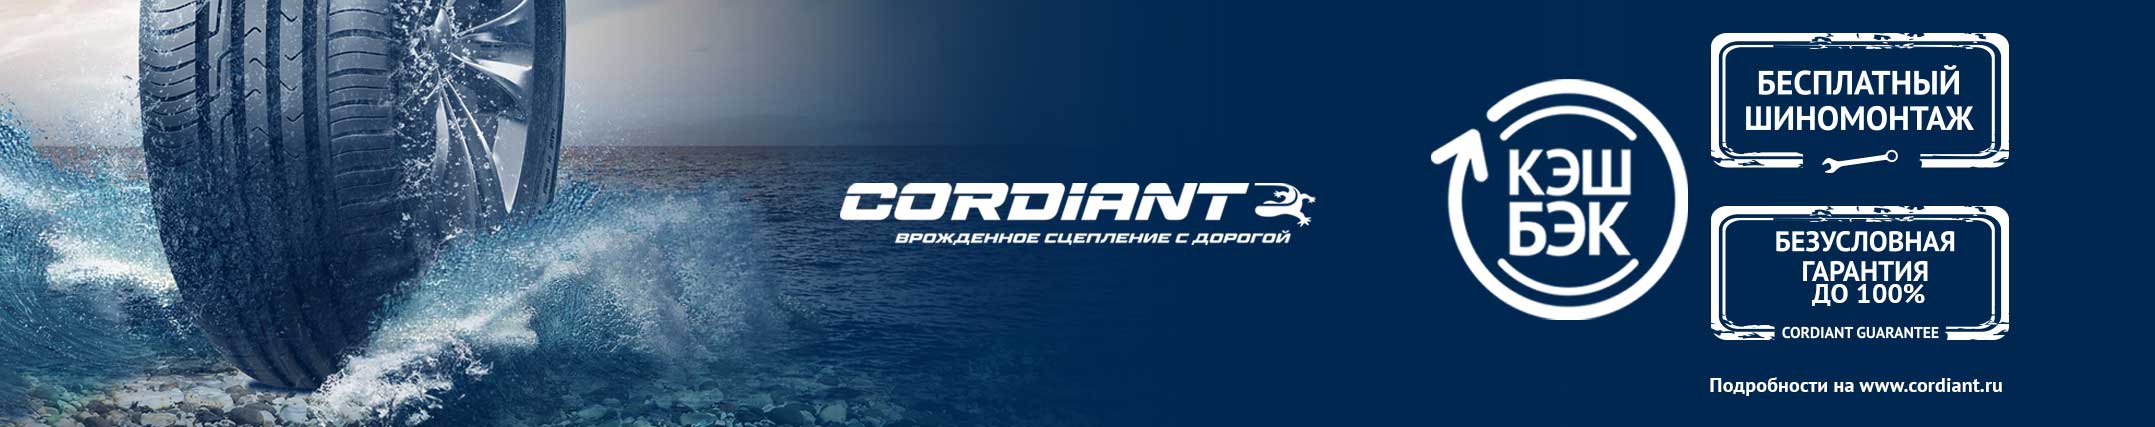 cordiant-slider-2155x427